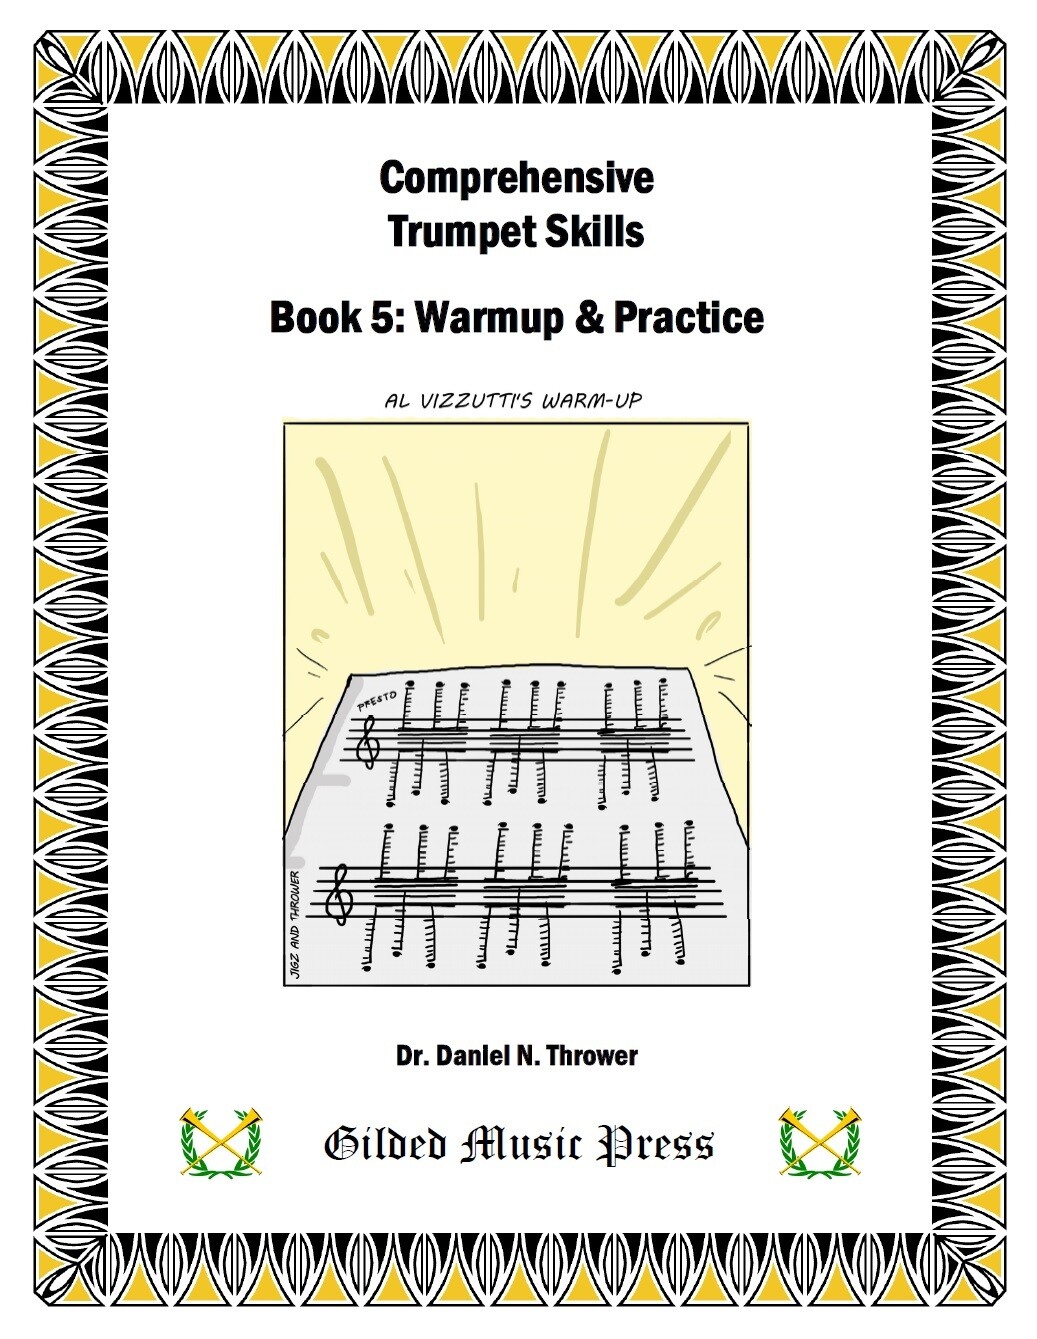 GMP 8005: Comprehensive Trumpet Skills, Book 5: Warmup & Practice, Dr. Daniel Thrower